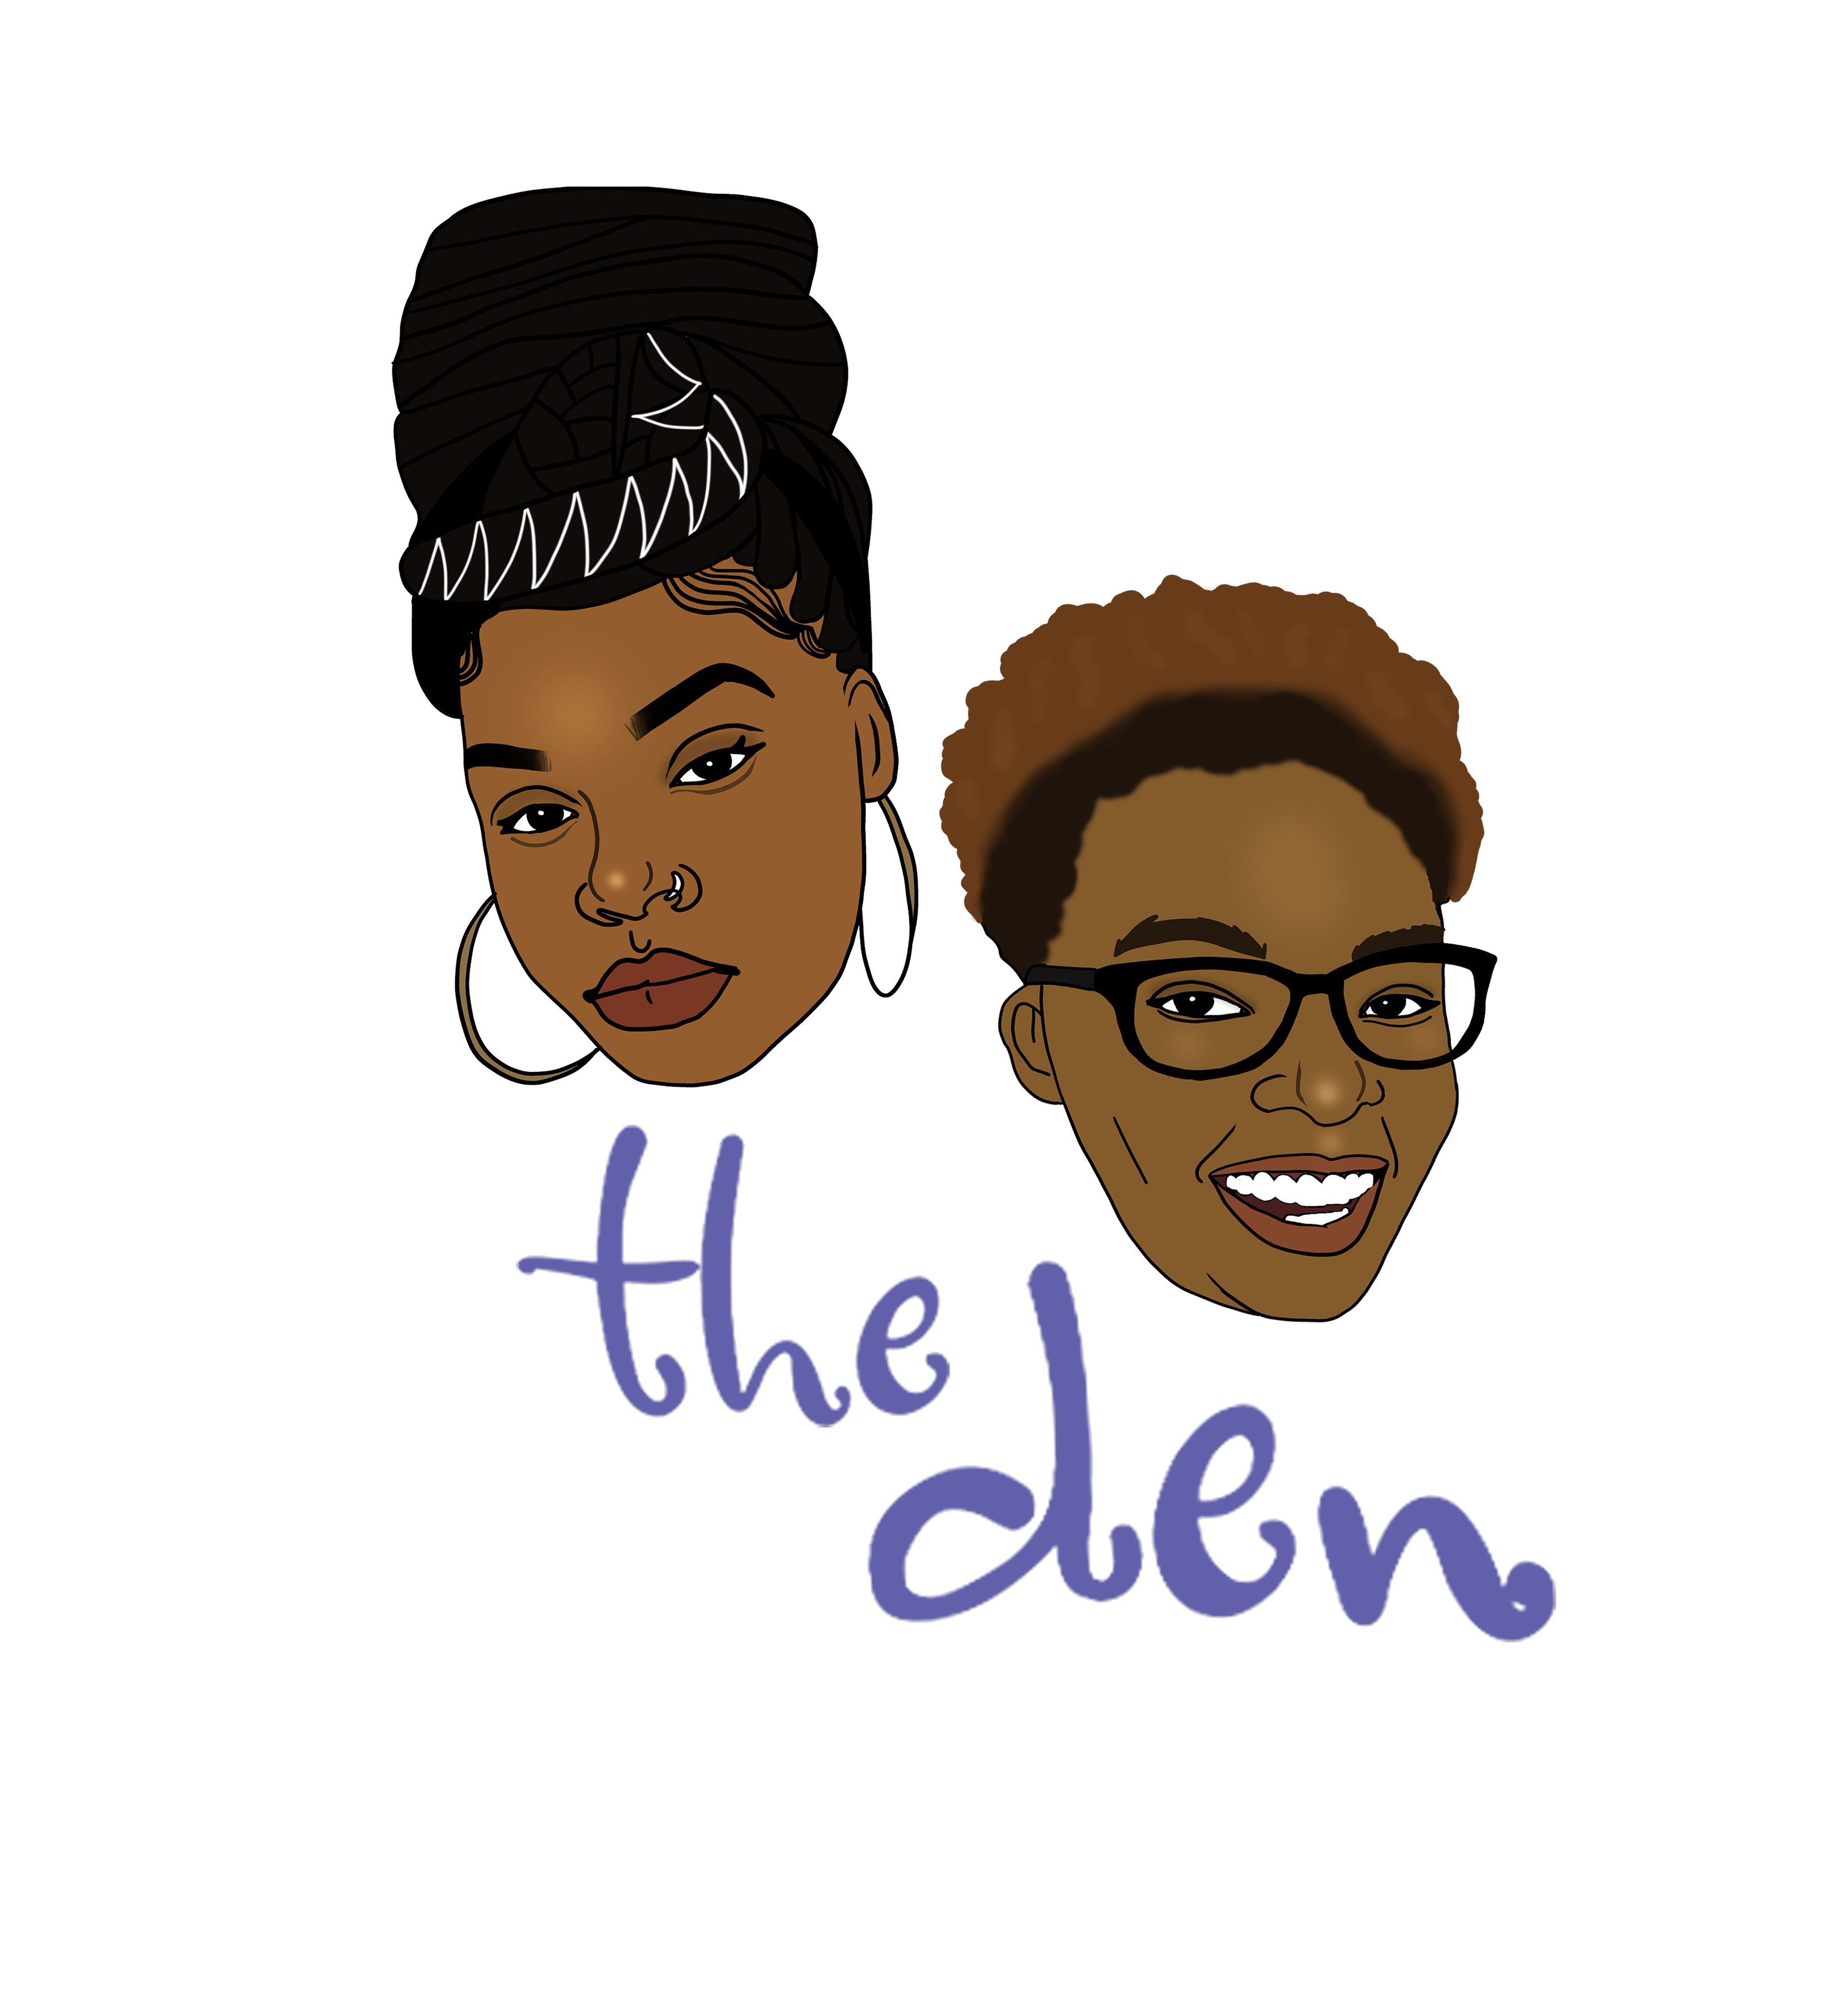 The Den Podcast